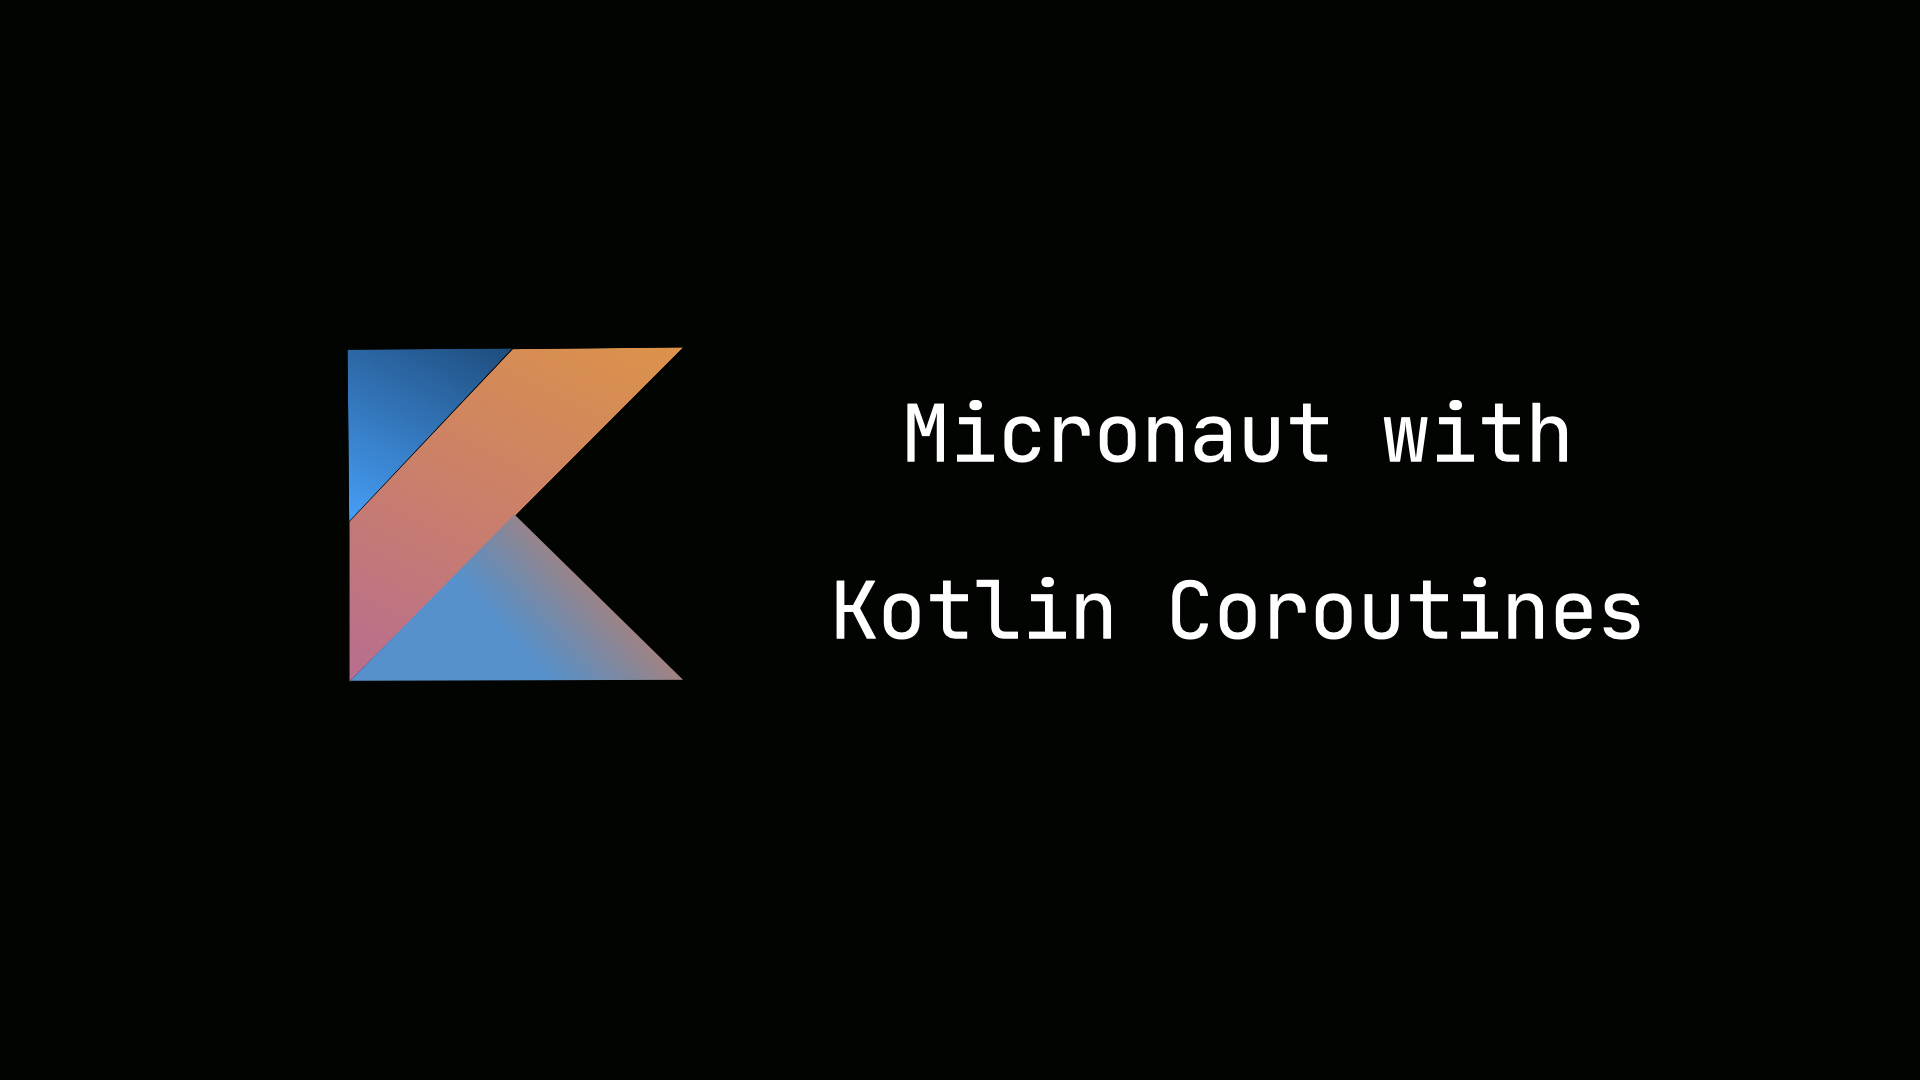 Micronaut with Kotlin Coroutines